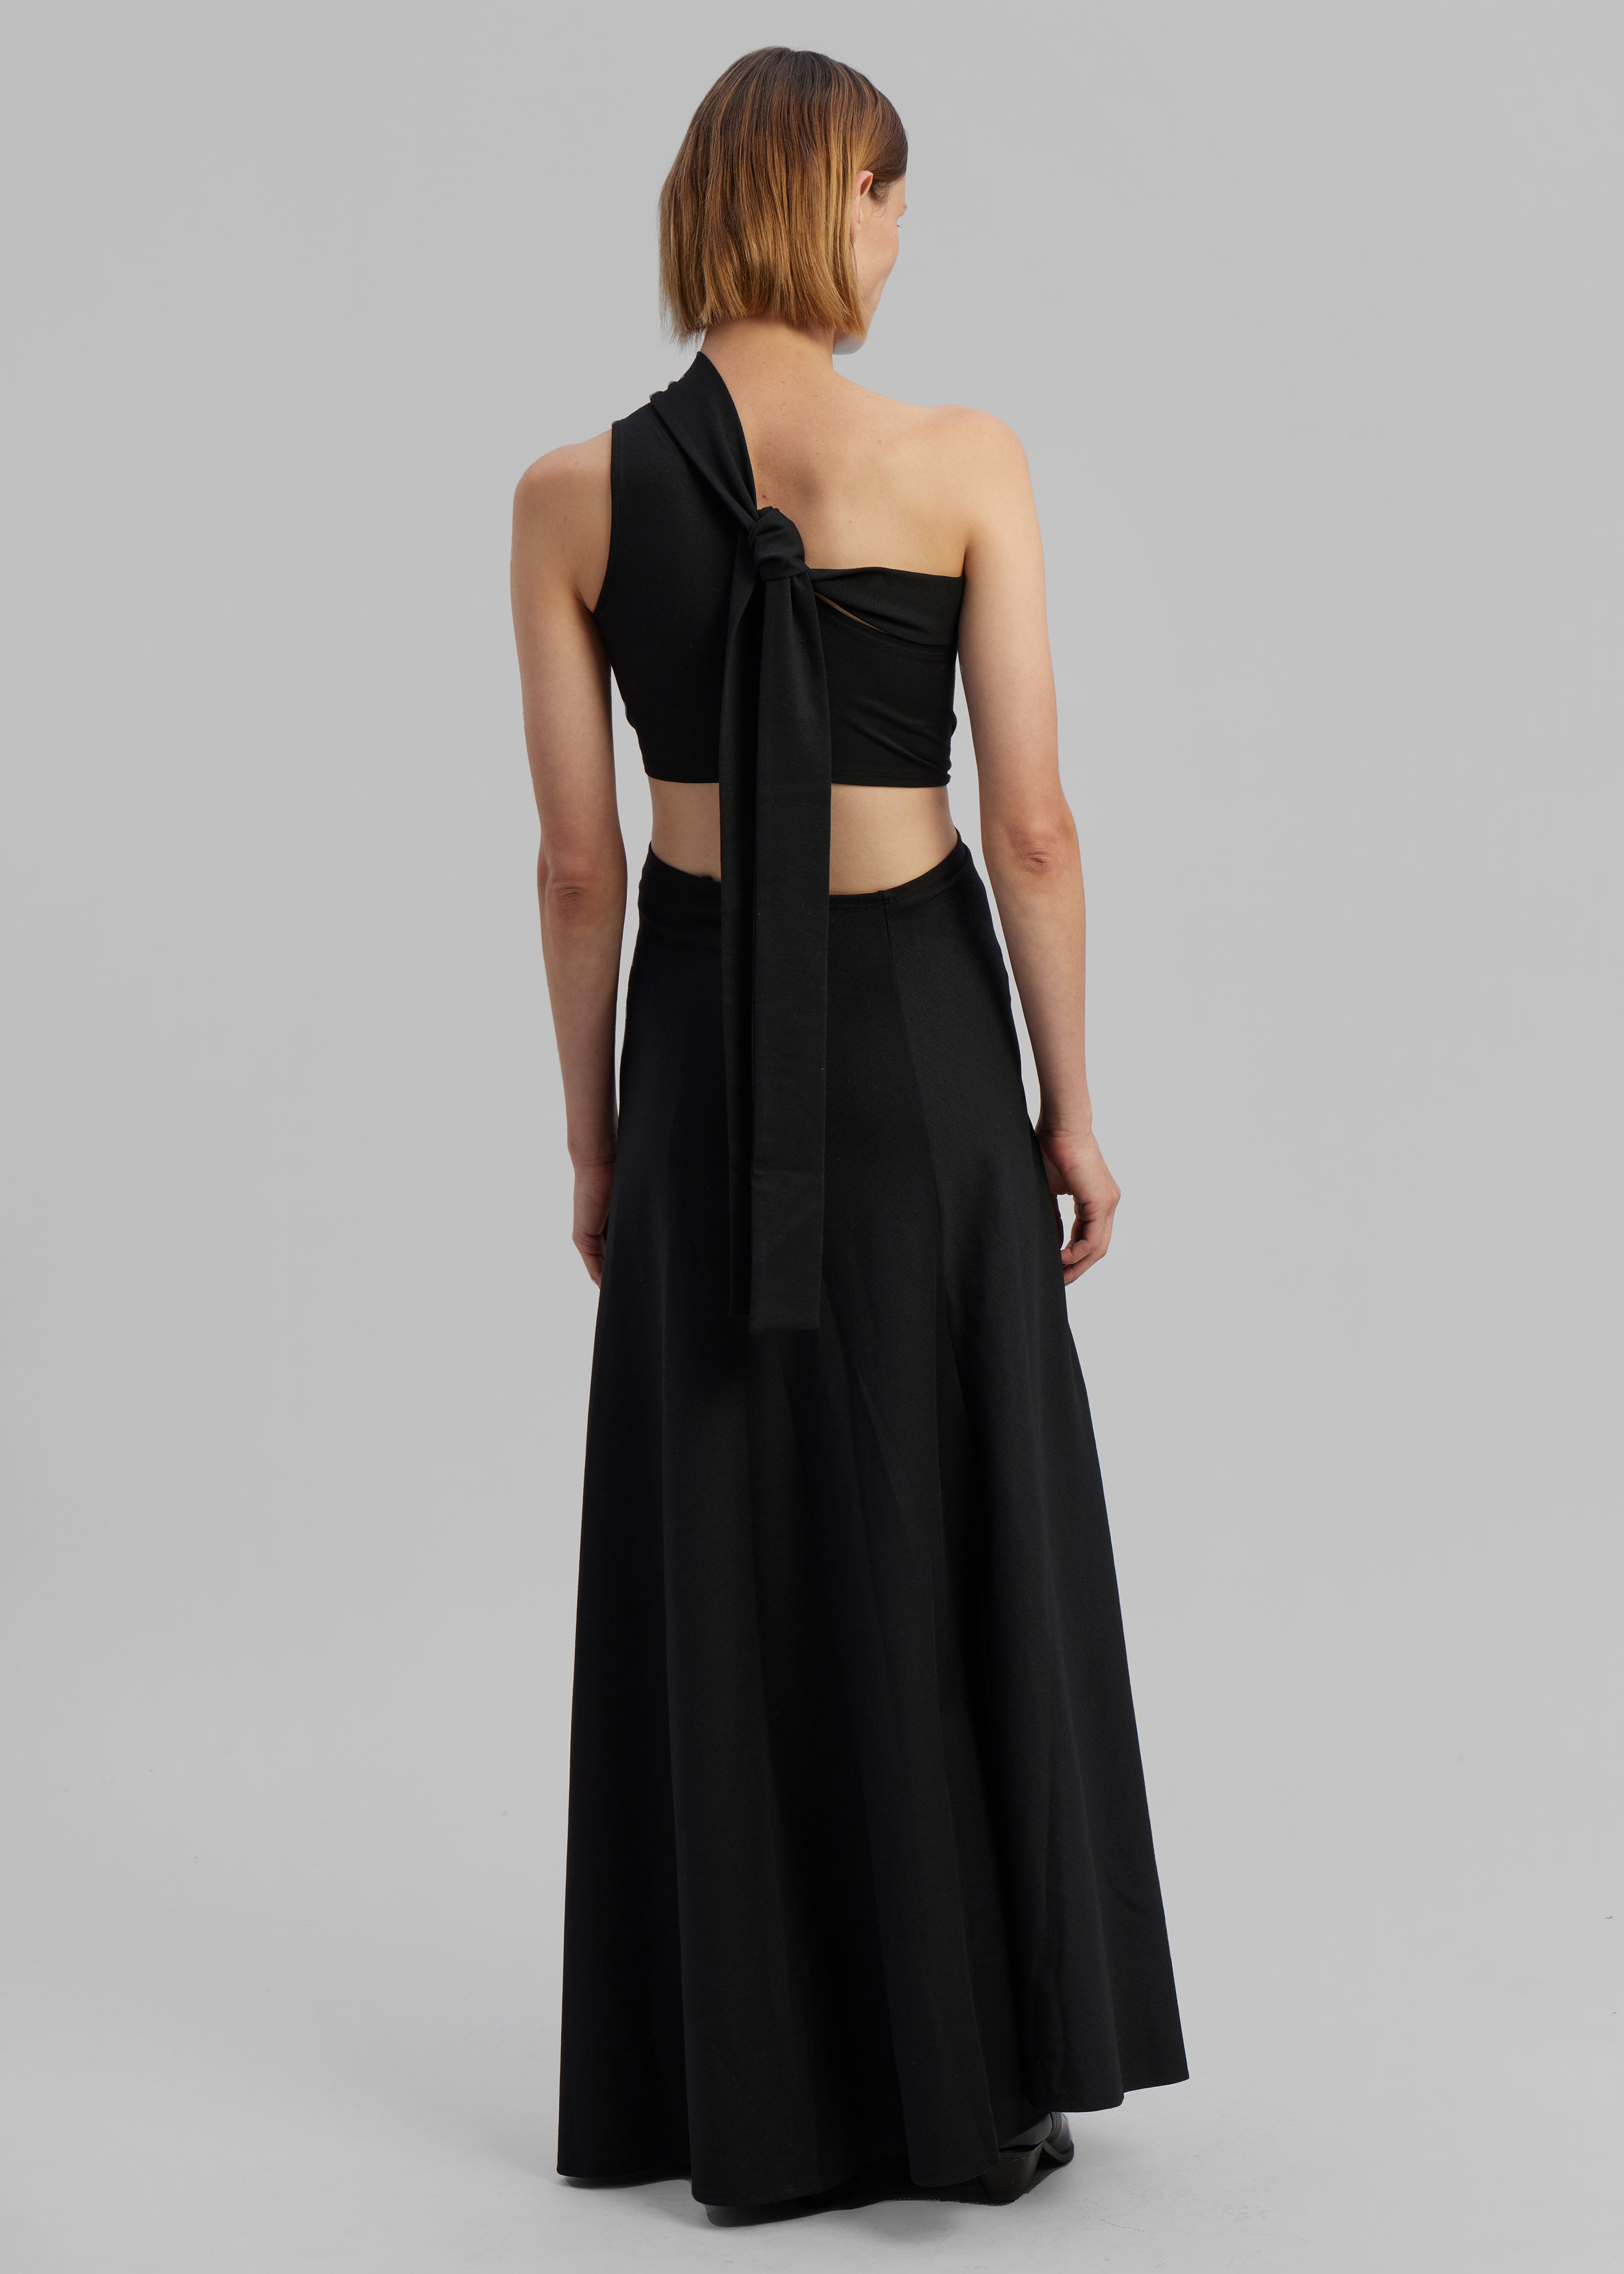 Sid Neigum Knit One-Shoulder Strap Dress W Hardware Detail - Black - 9